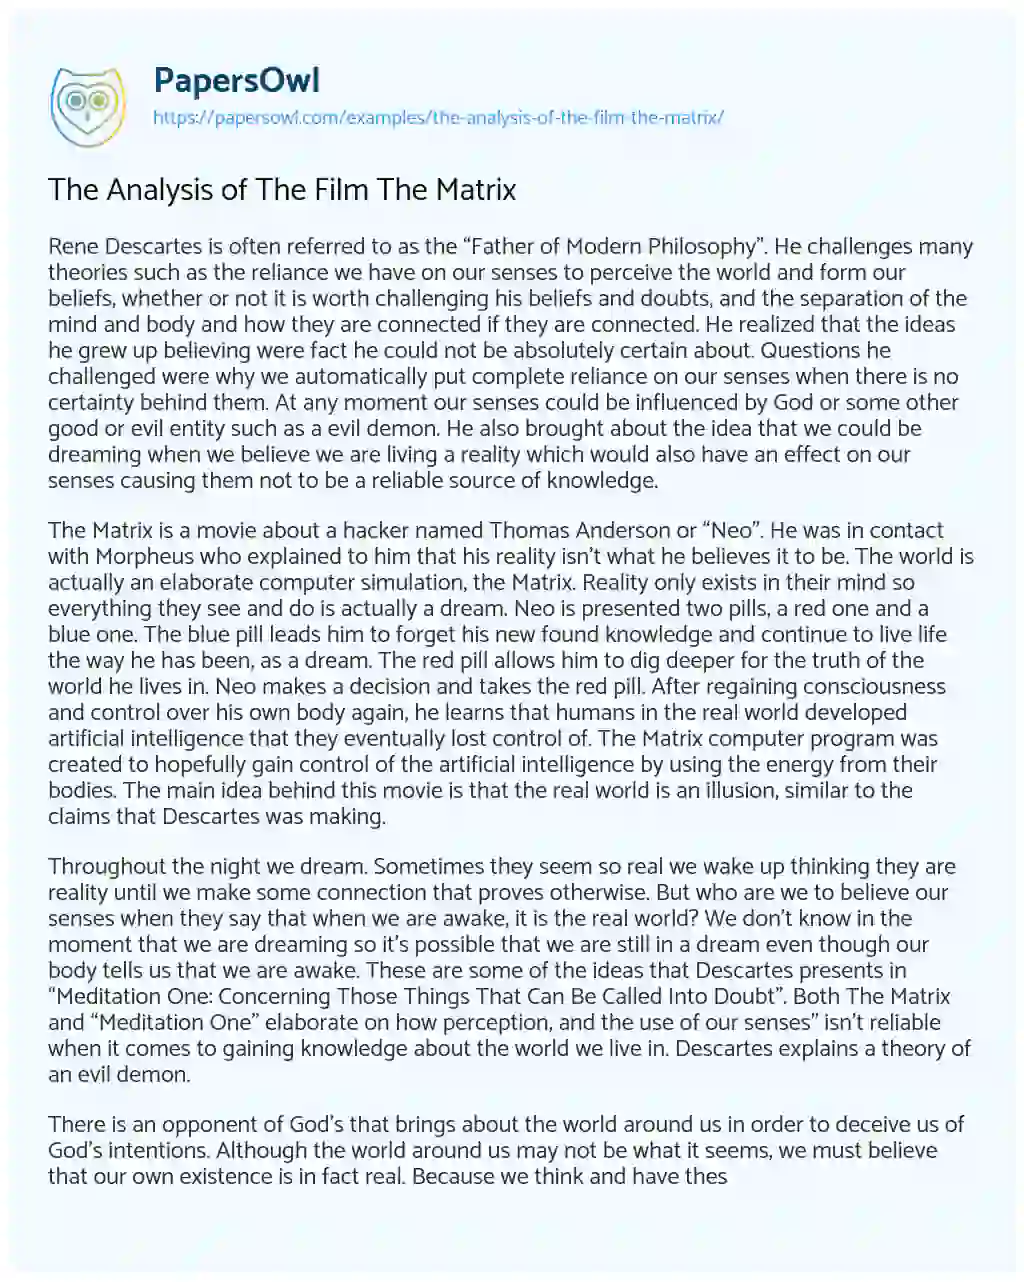 The Analysis of the Film the Matrix essay